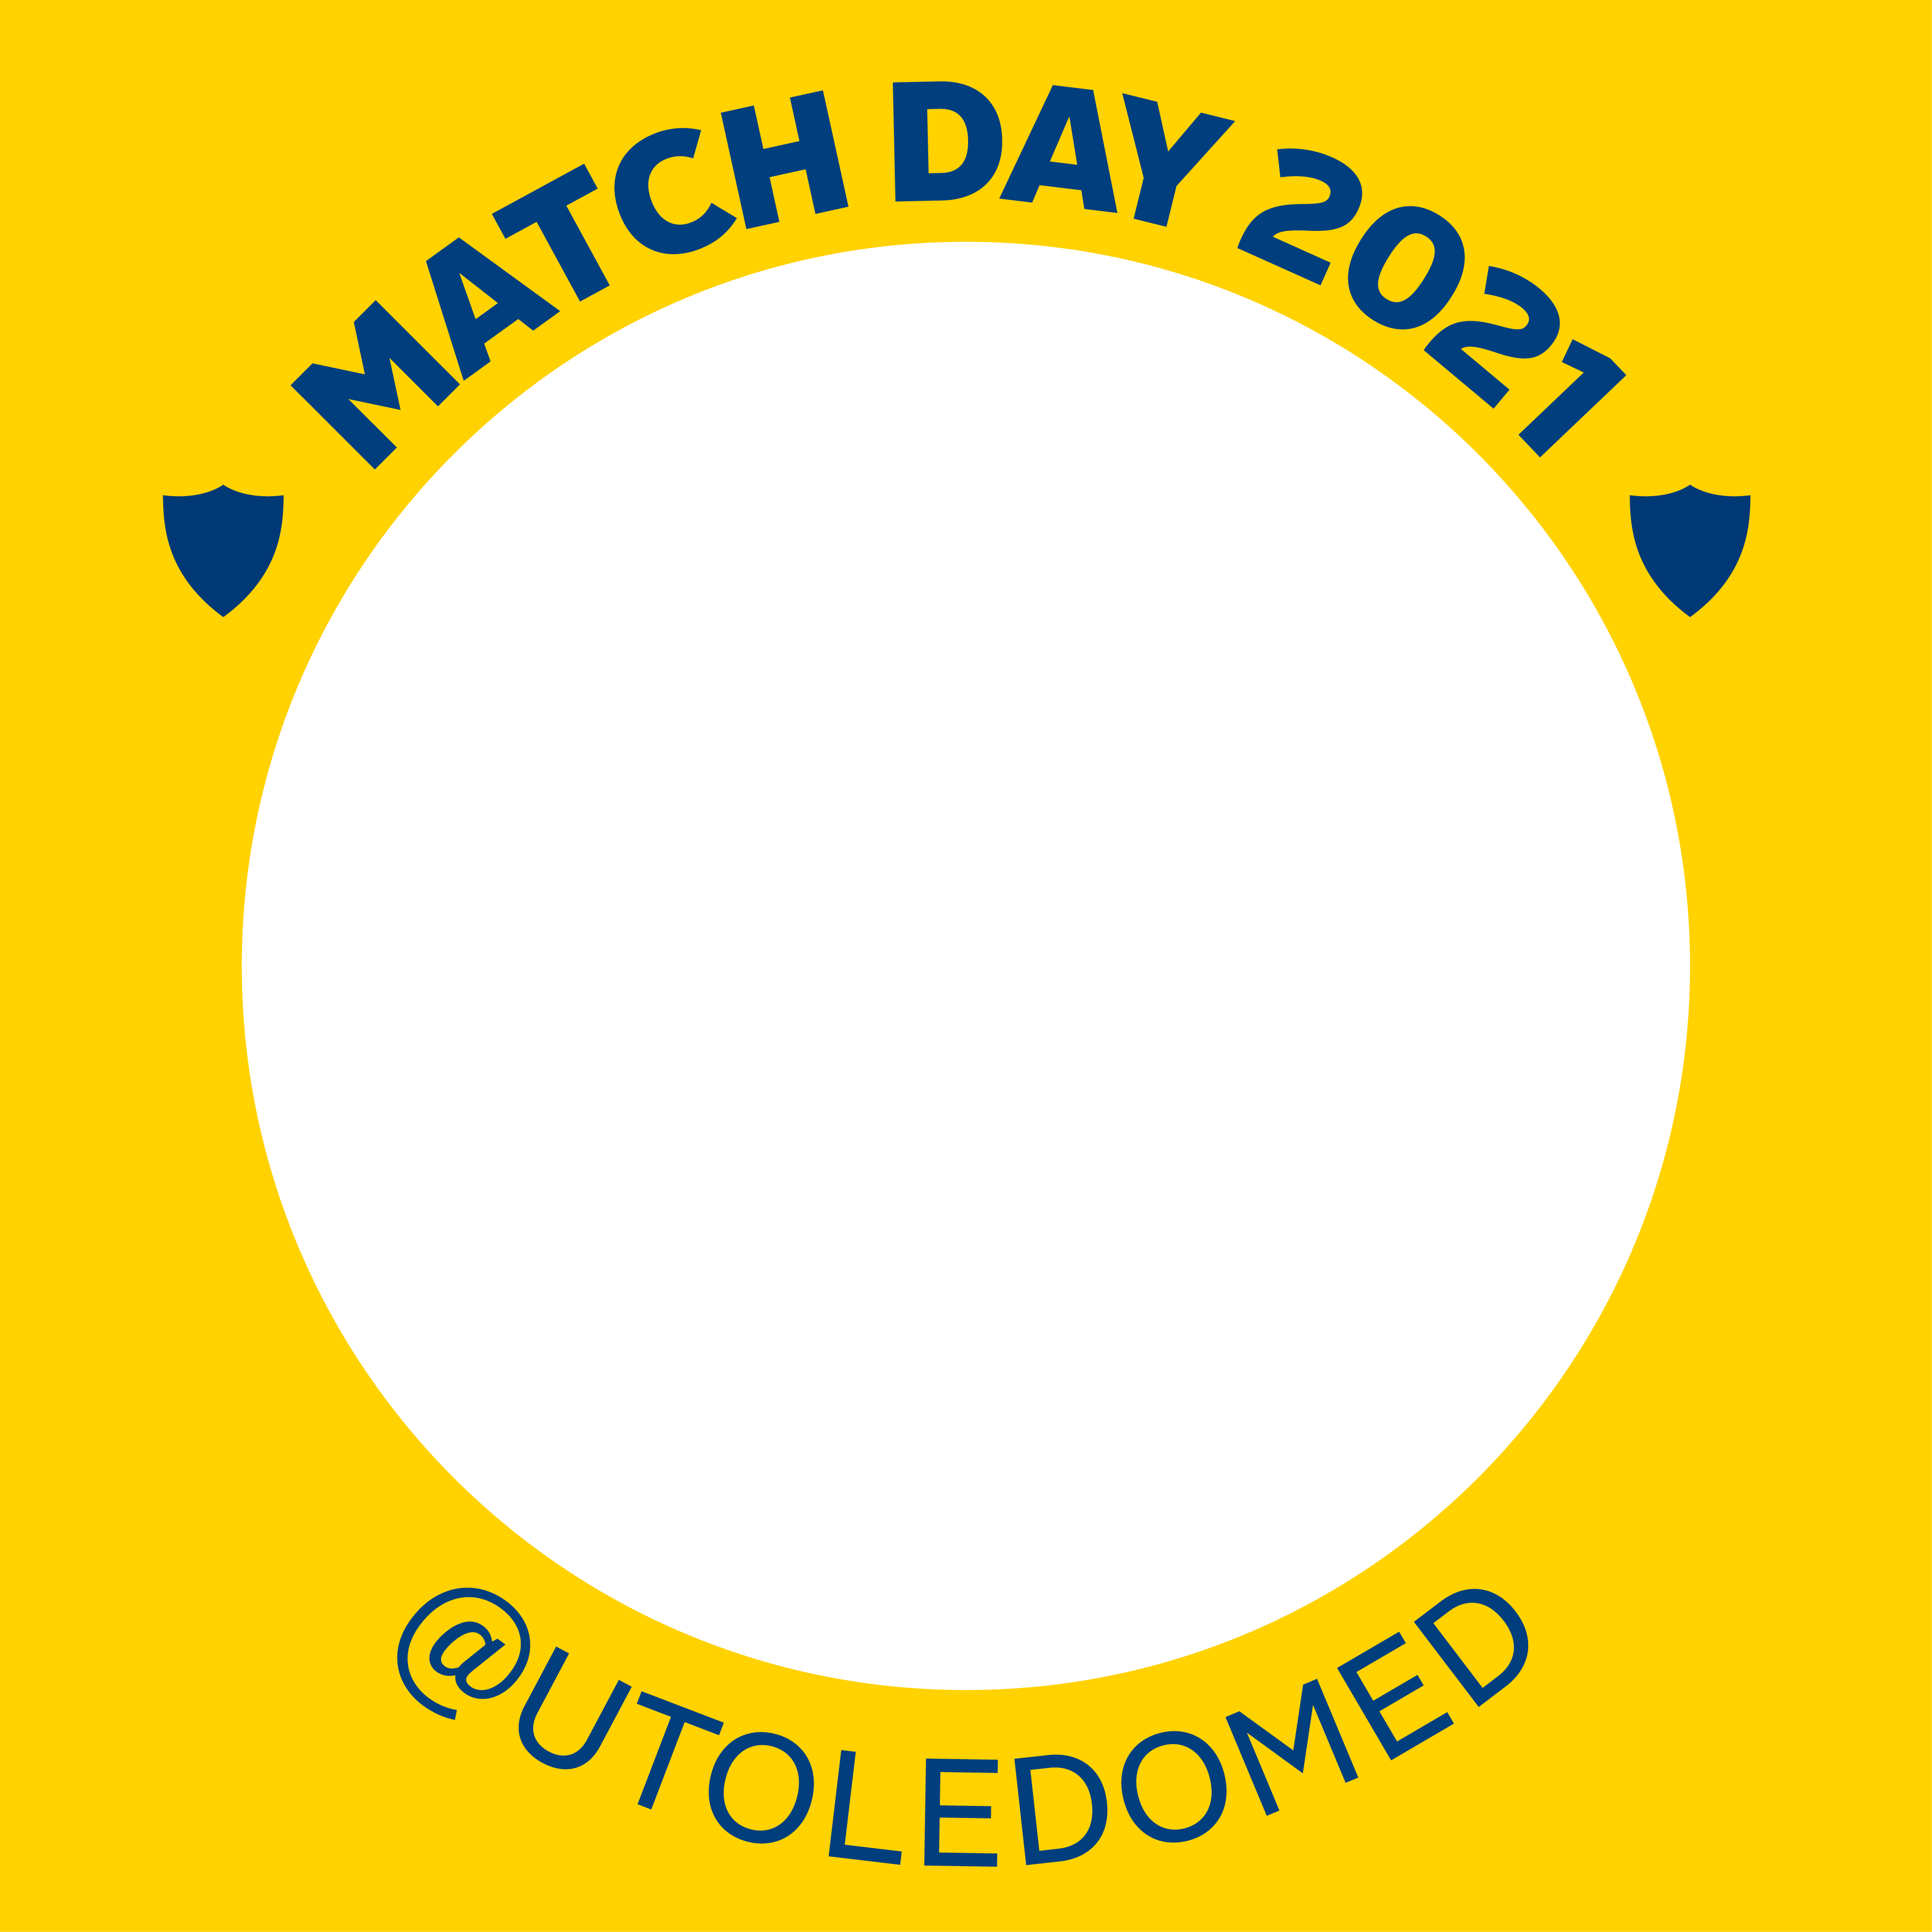 Match Day social media image